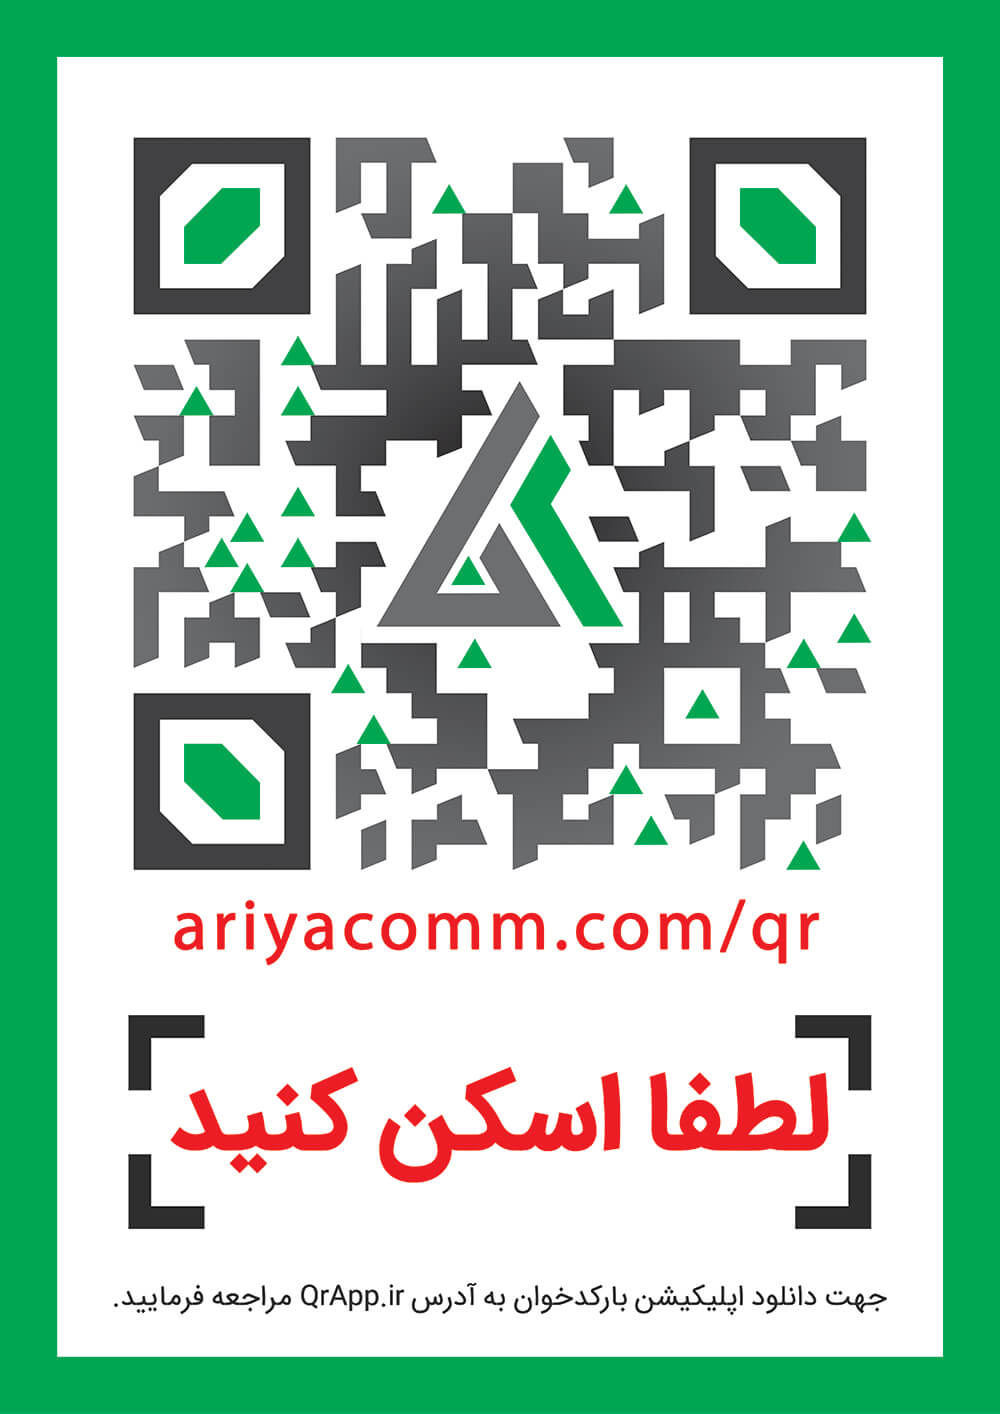 Ariyacomm